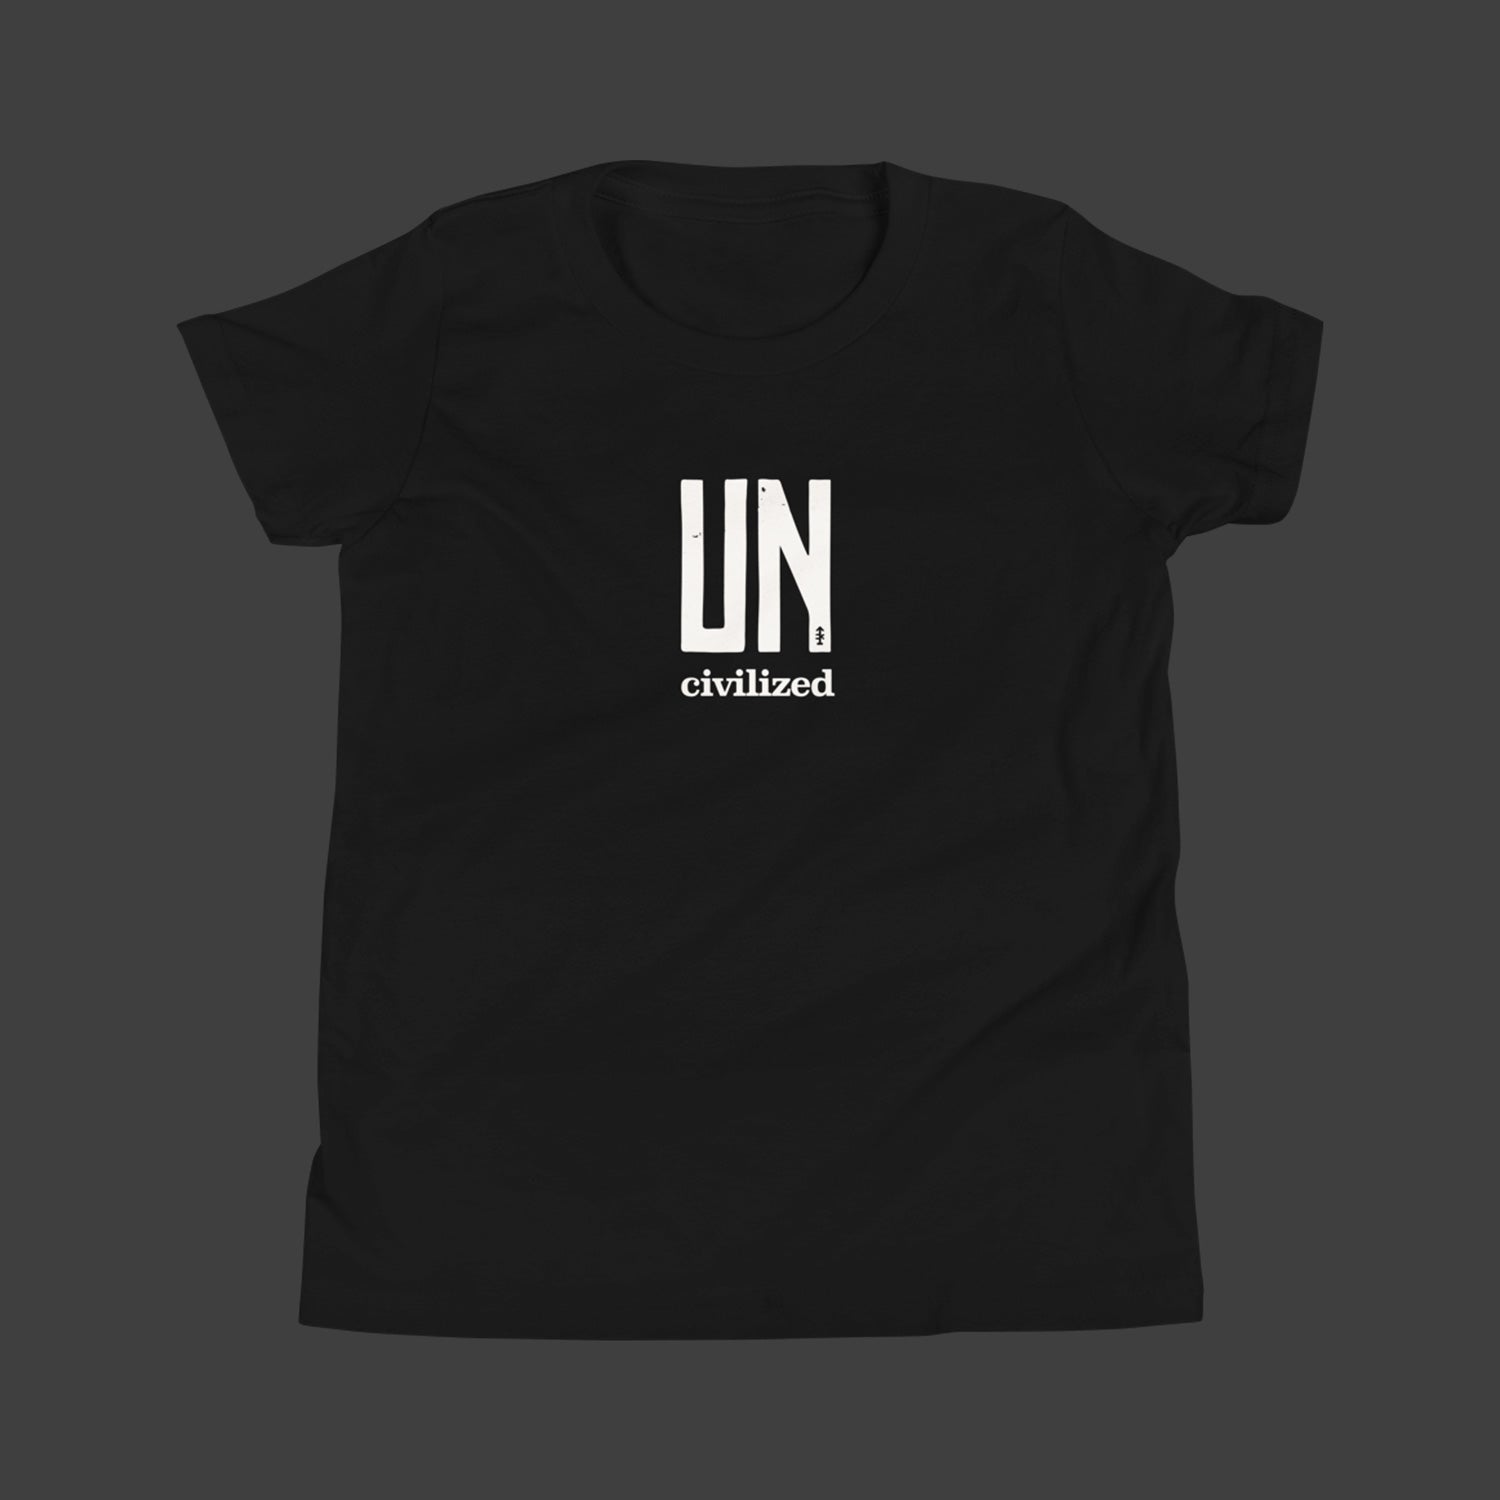 Youth UNcivilized T-Shirt (Black)